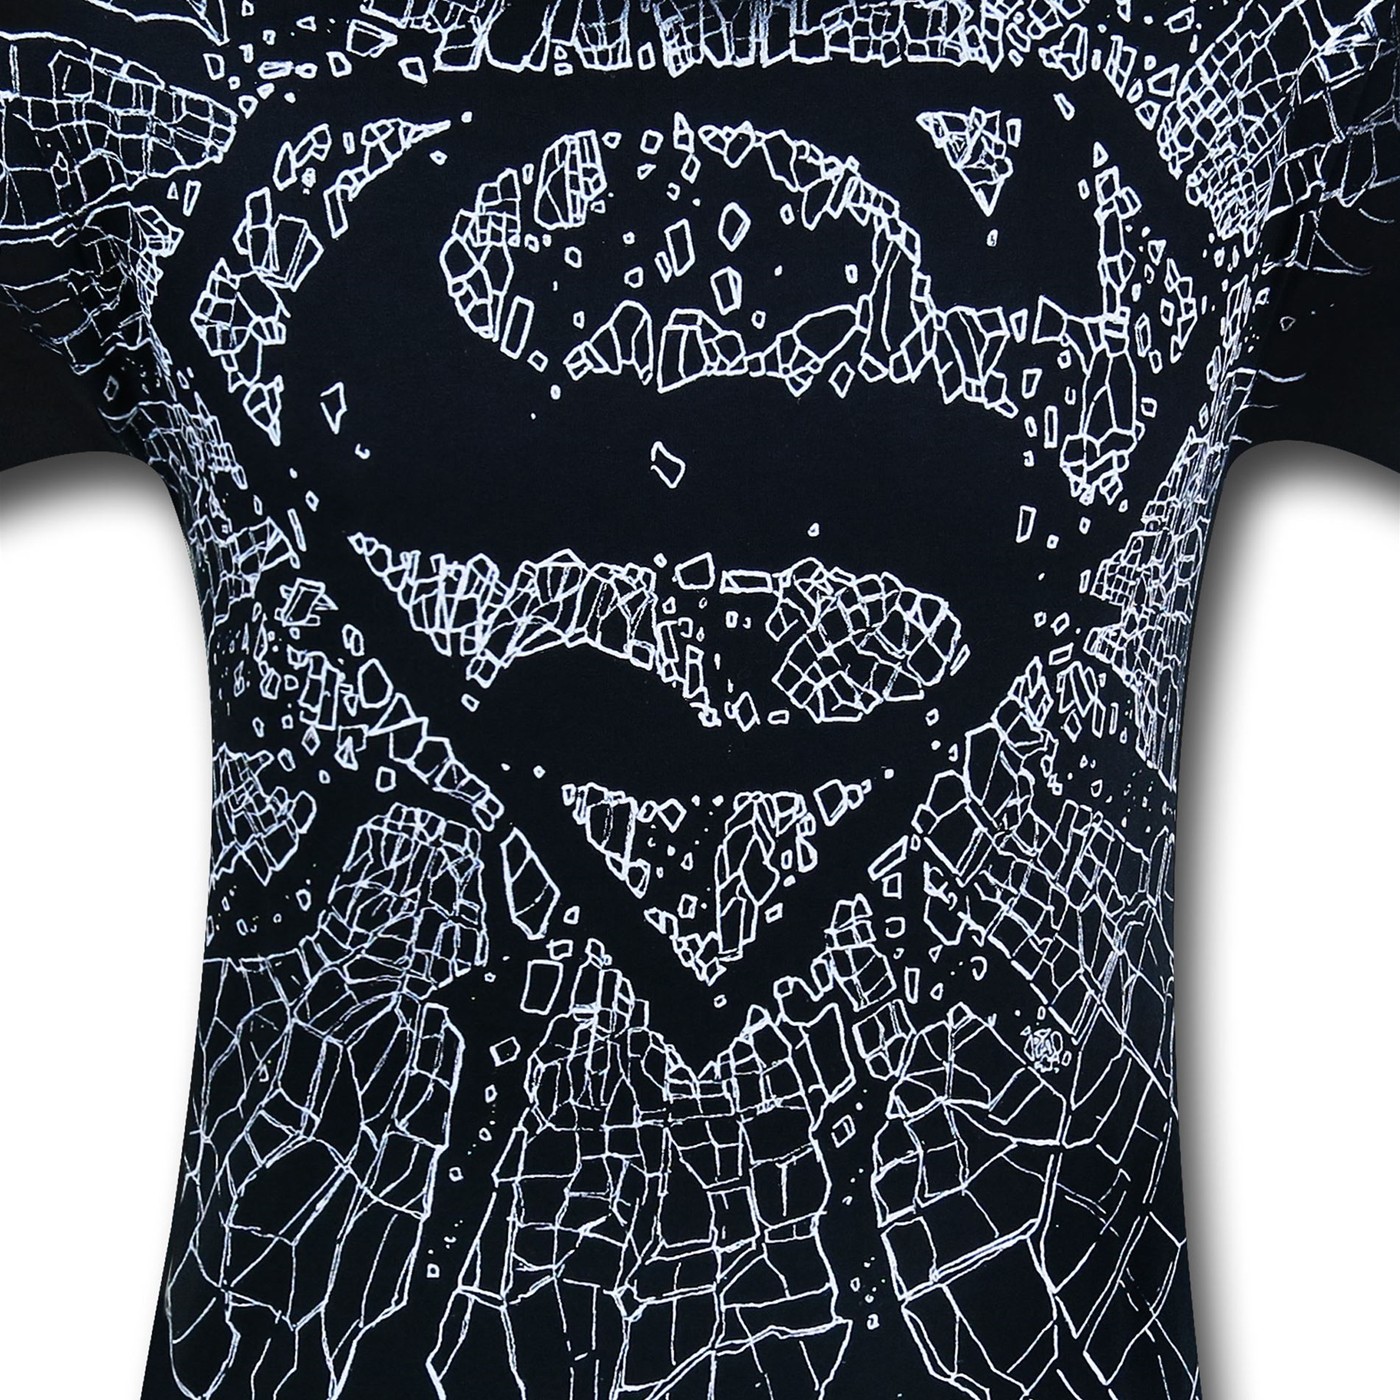 Superman Cracked Symbol T-Shirt